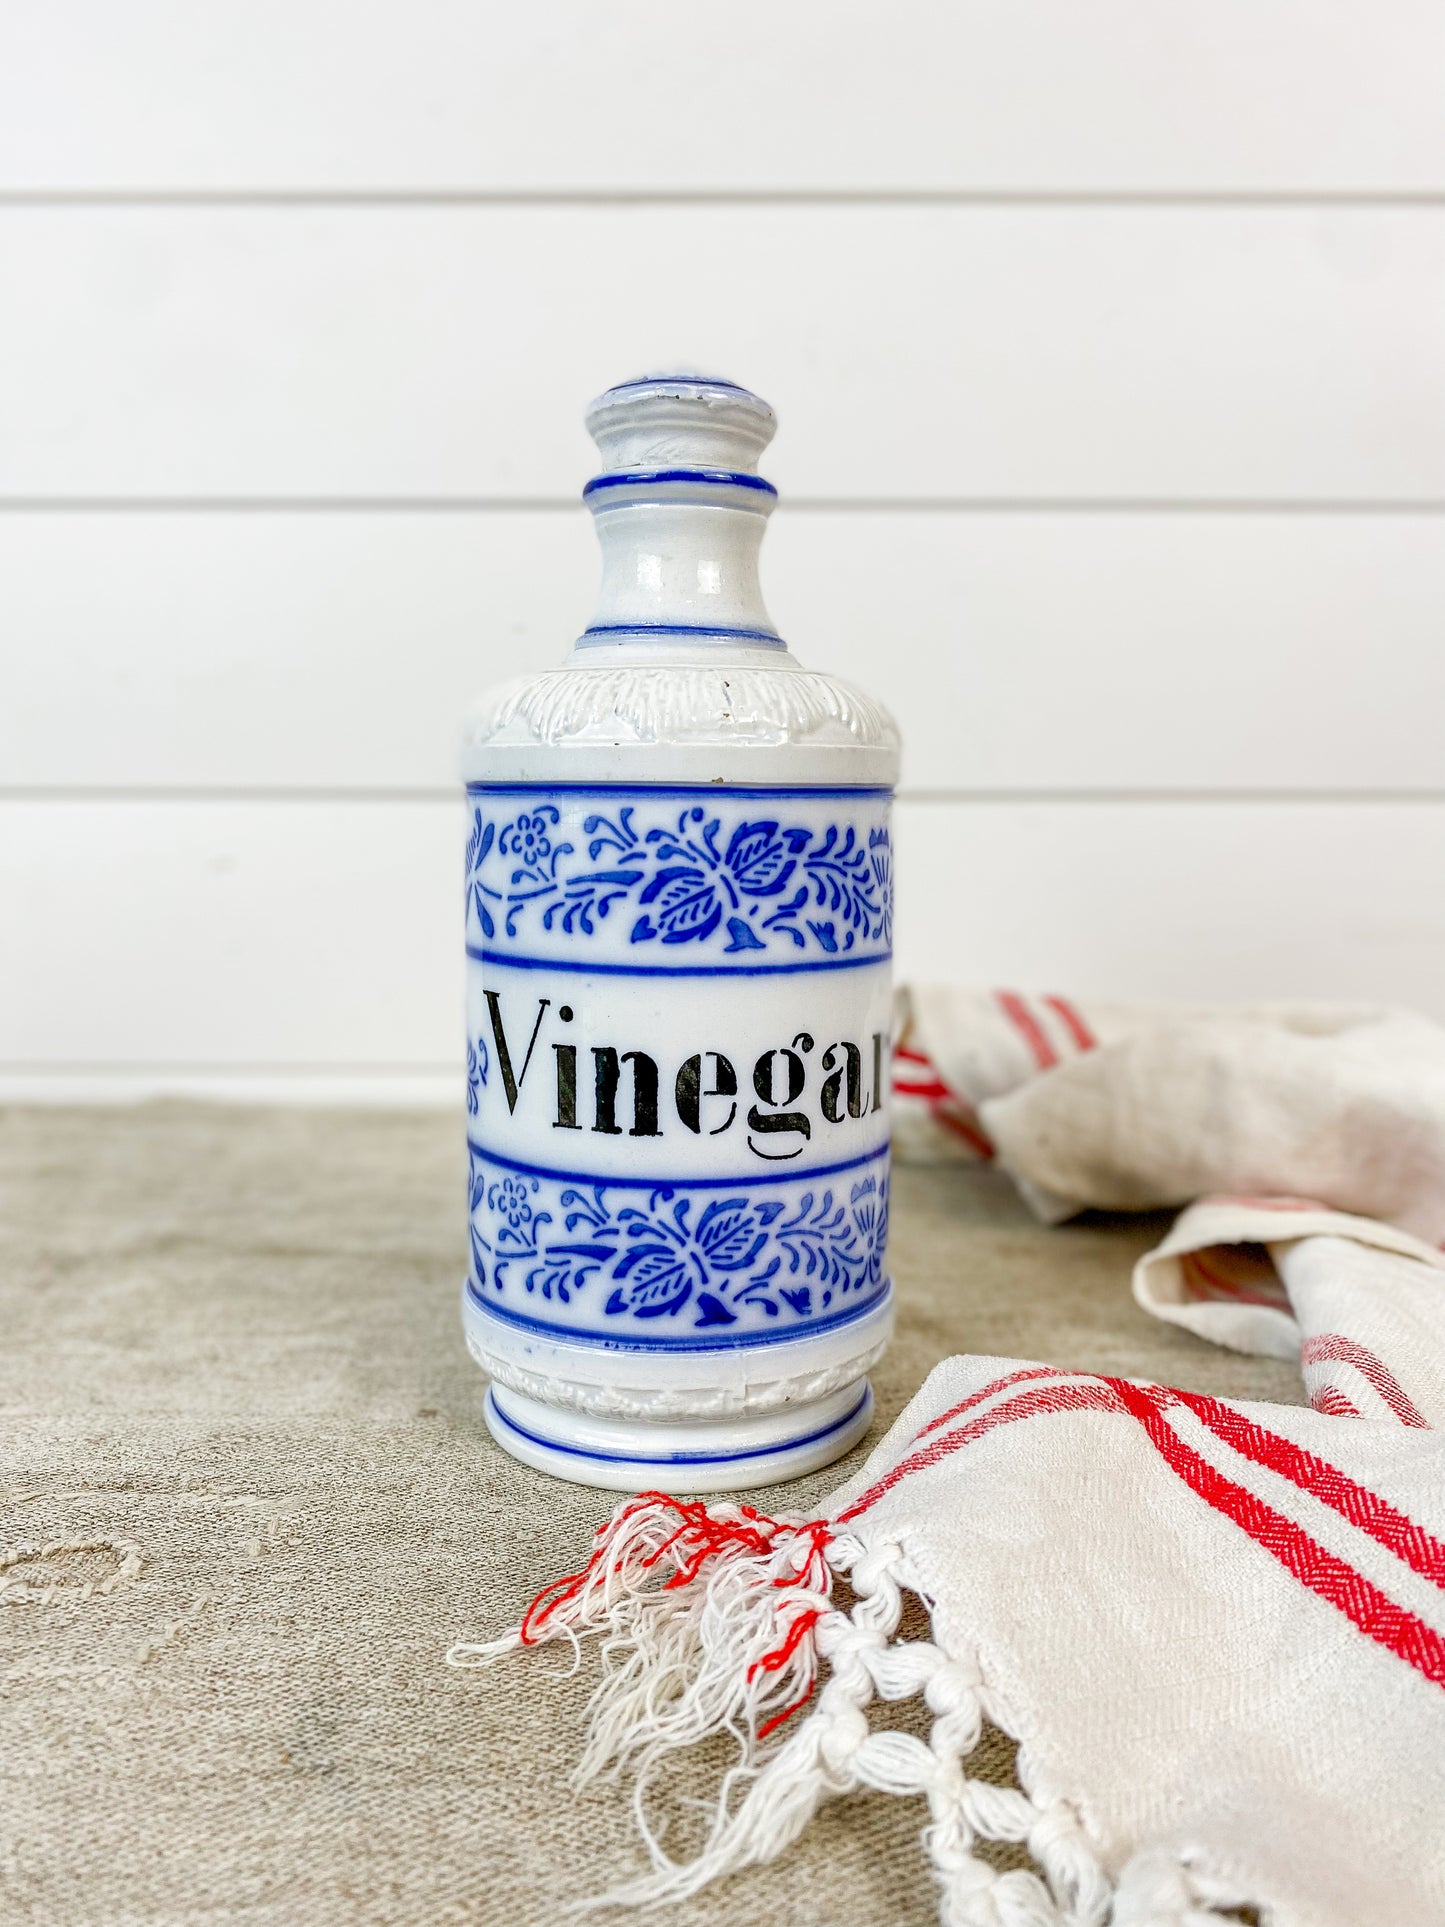 Antique Blue Onion Meissen-Style Vinegar Cruet Bottle with Stopper